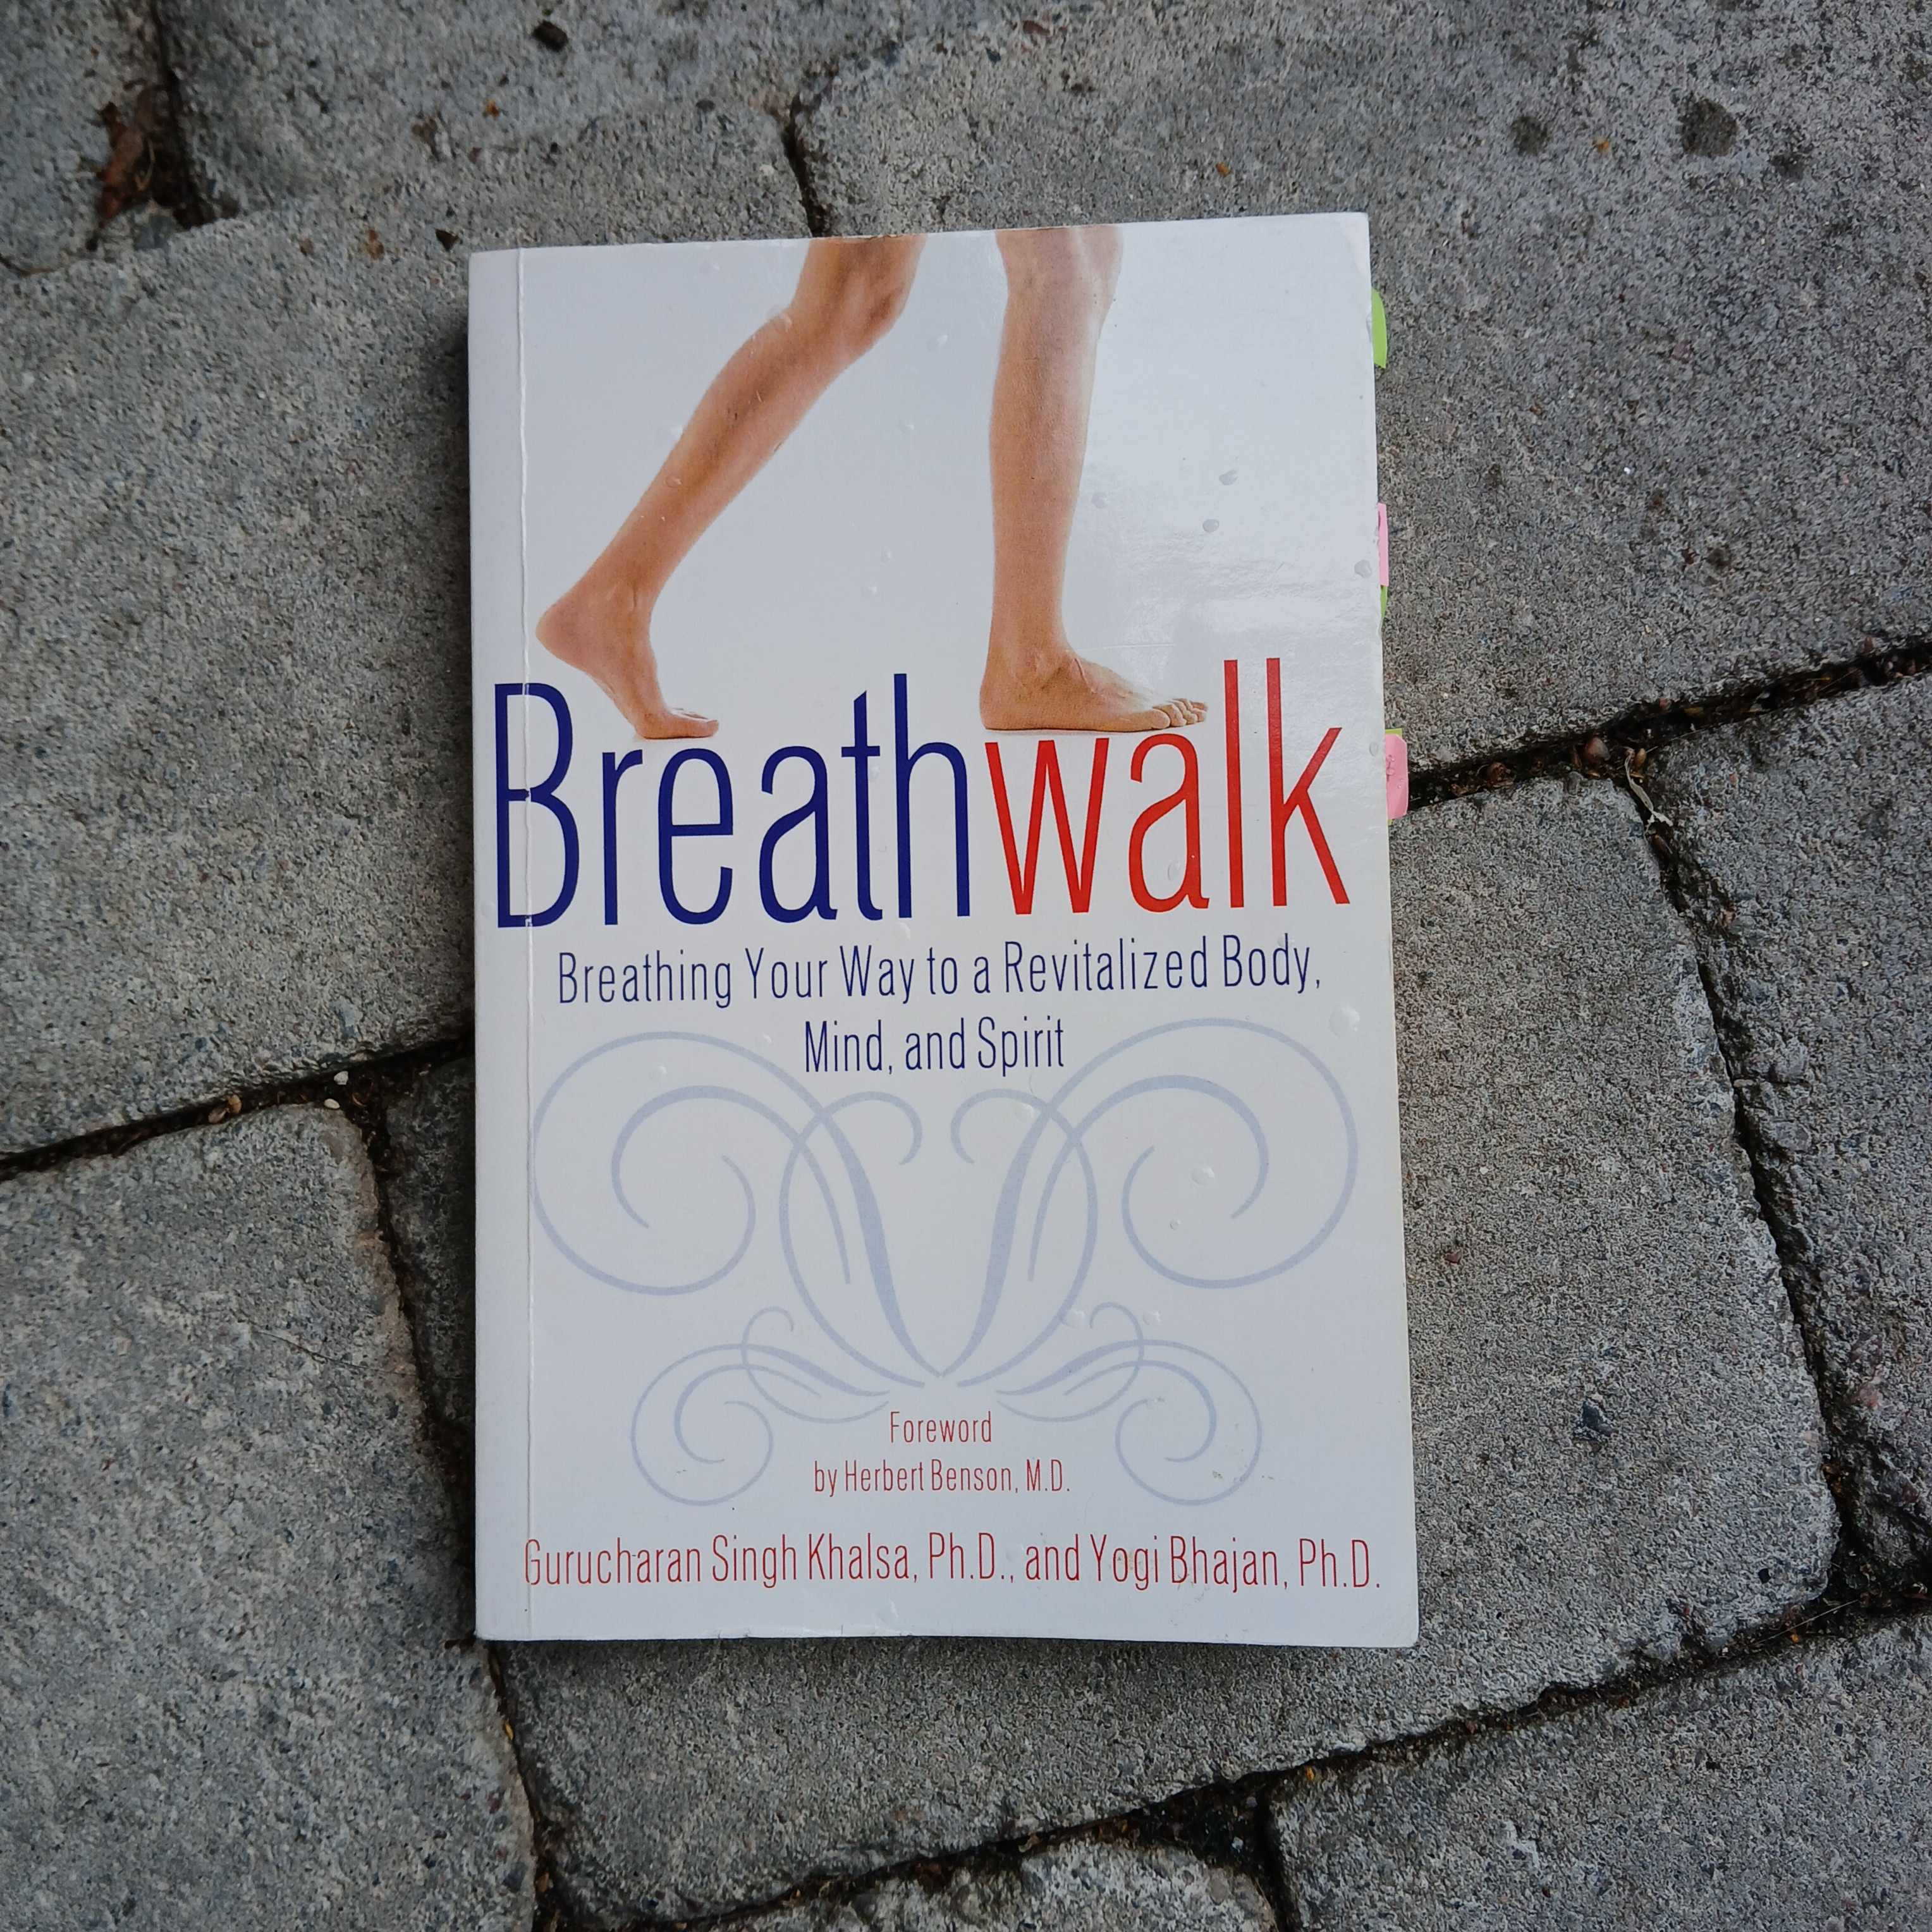 bok om Breathwalk